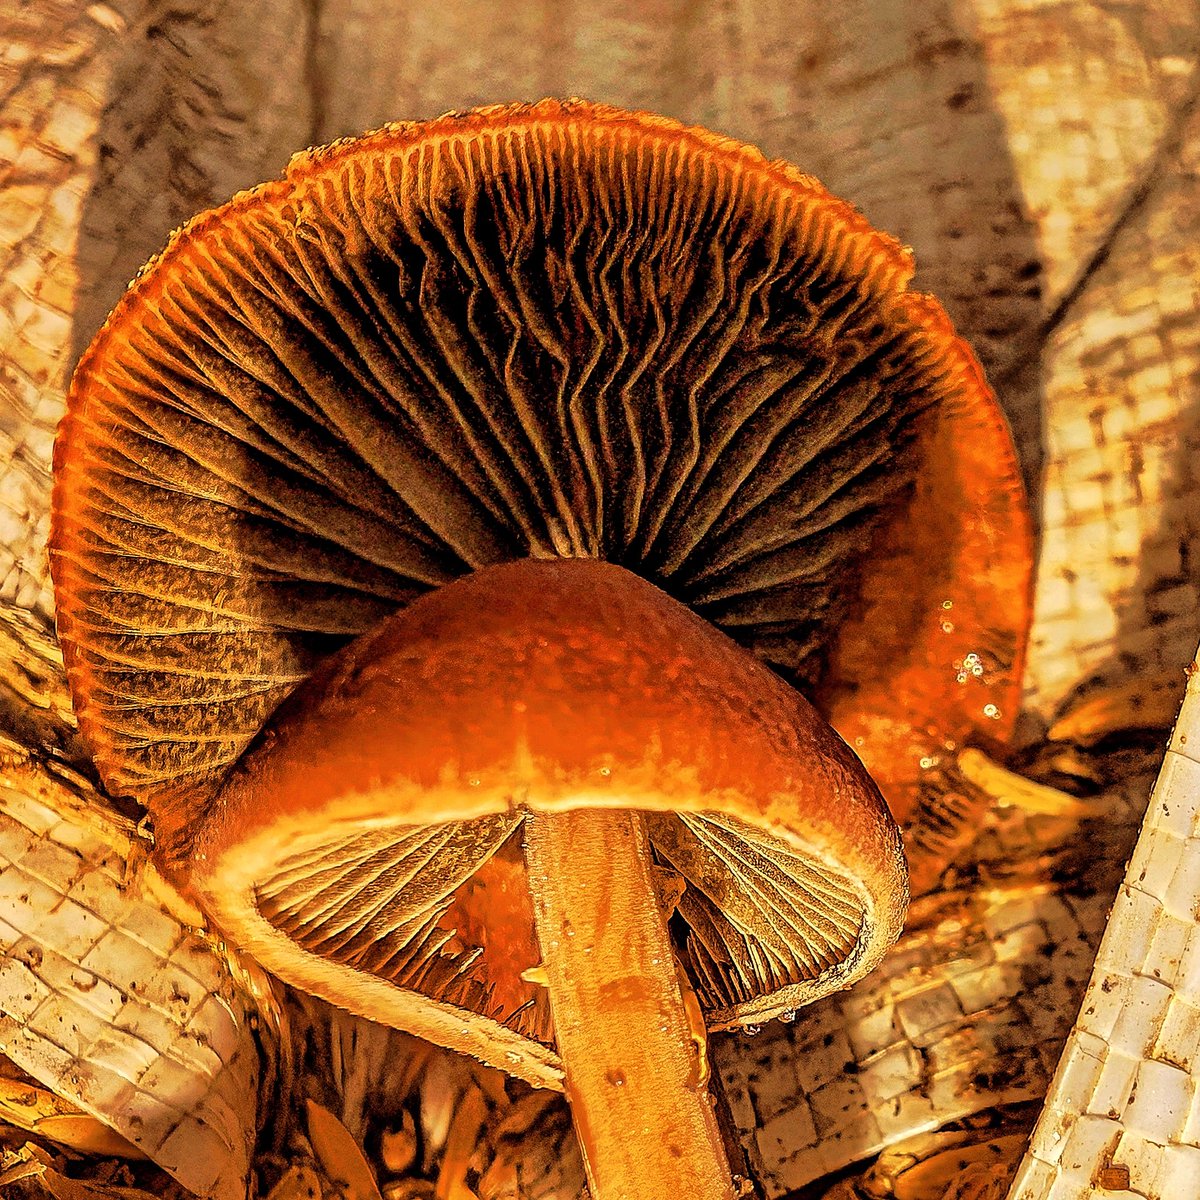 A few farm fungi photos